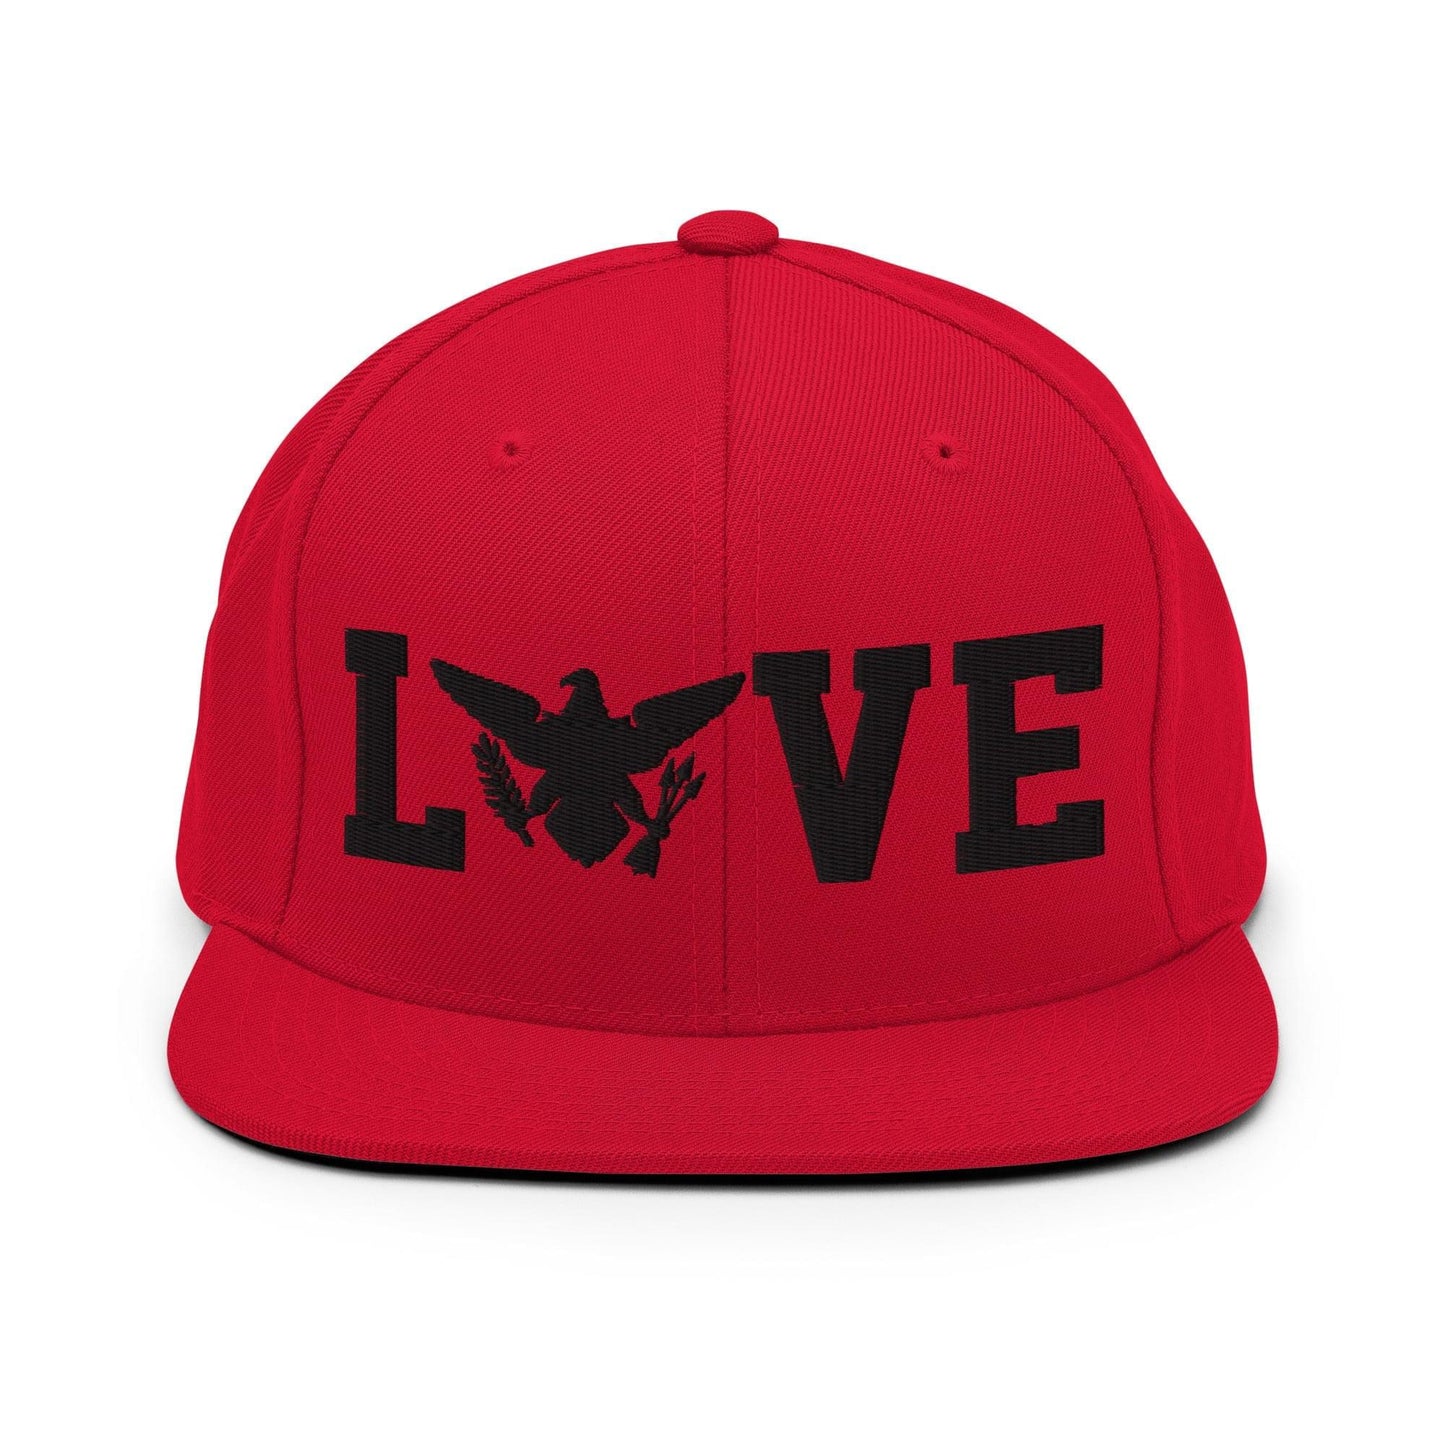 Love black Snapback Hat | Phade Fashion Virgin Islands